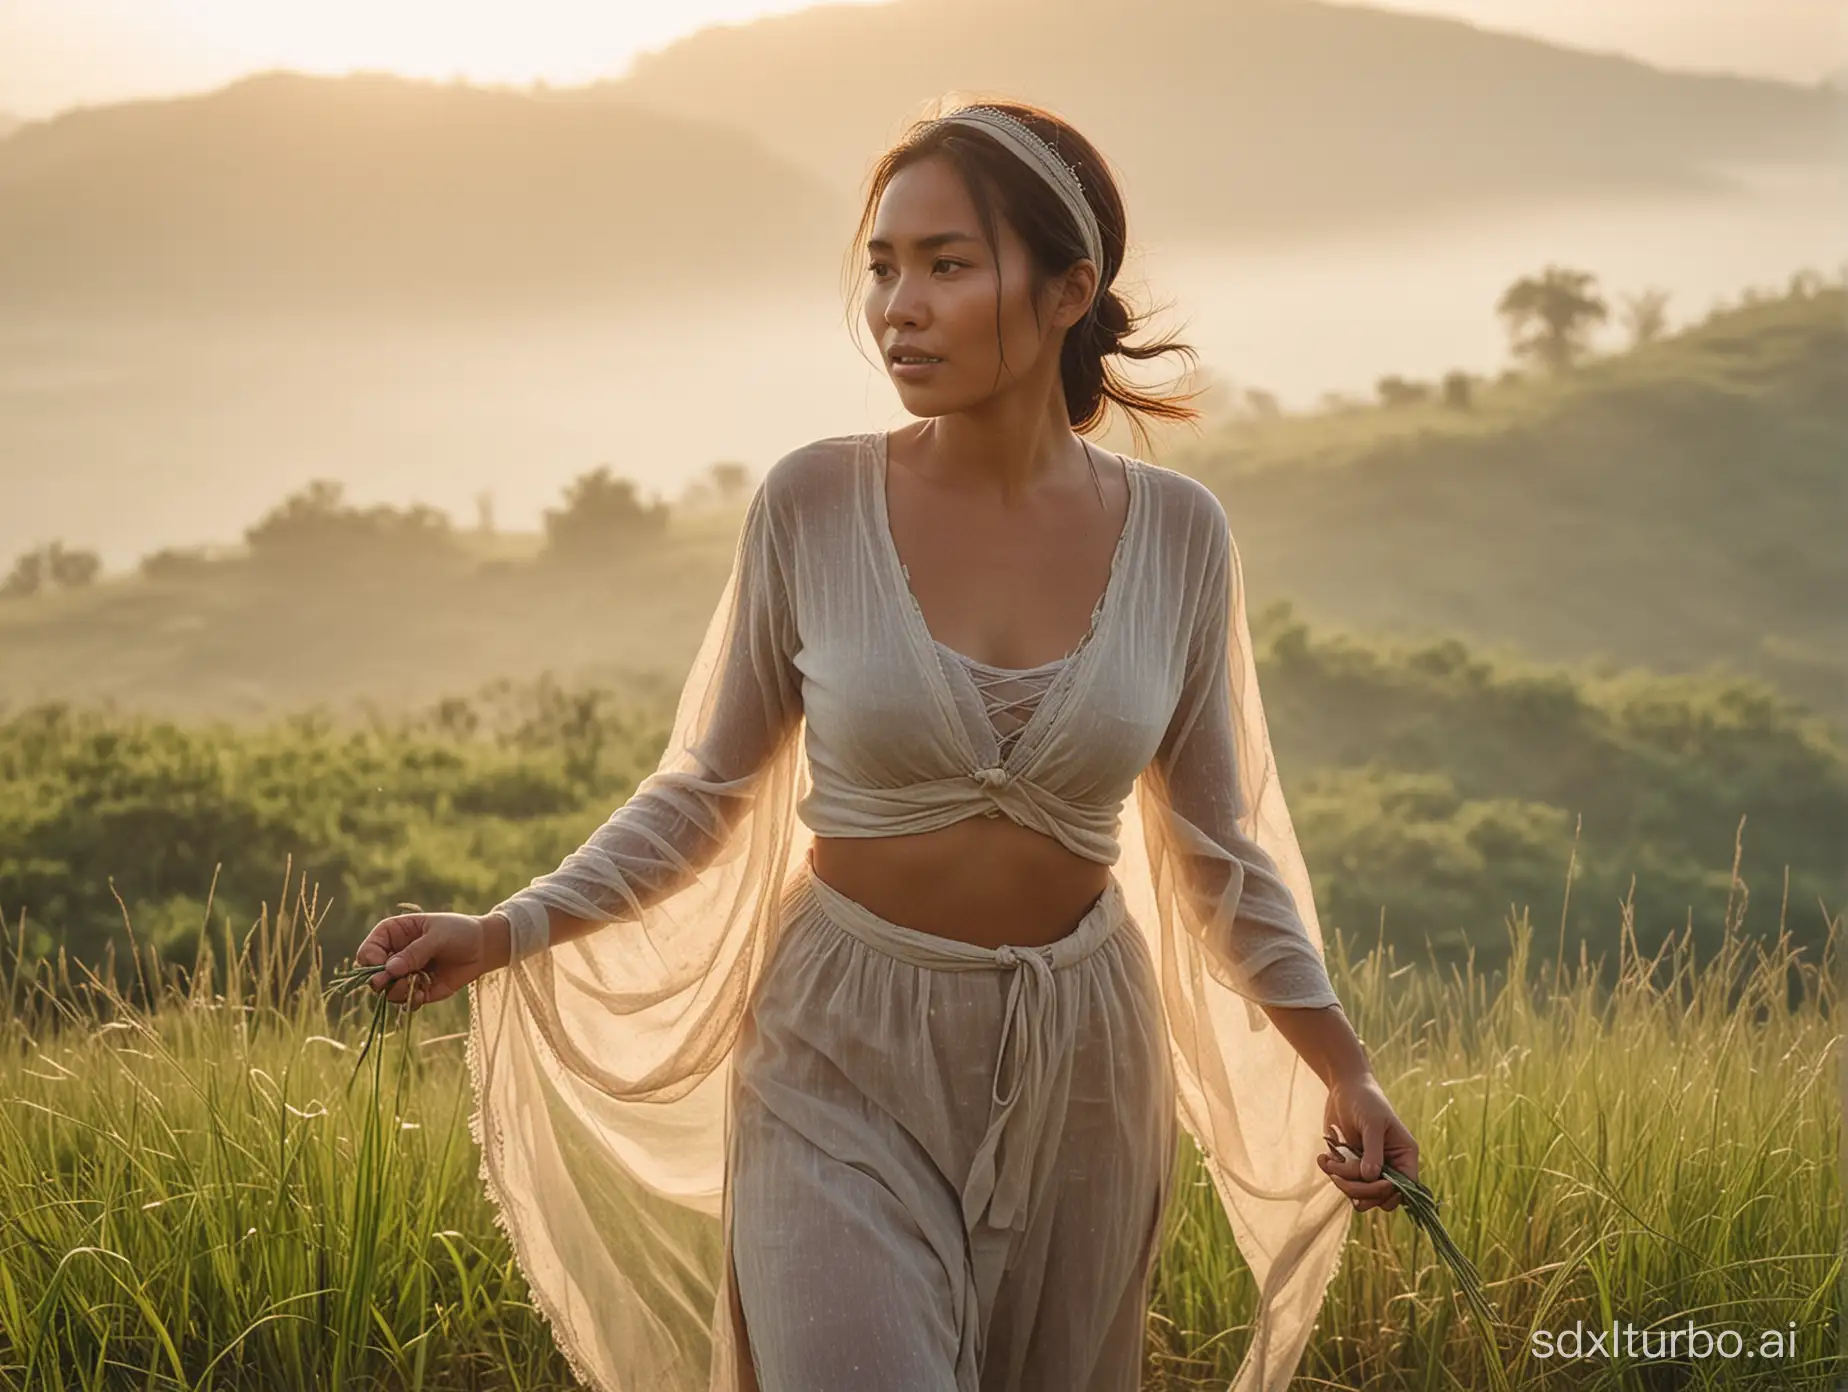 Filipina-Woman-Cutting-High-Grass-at-Sunrise-on-Hilltop